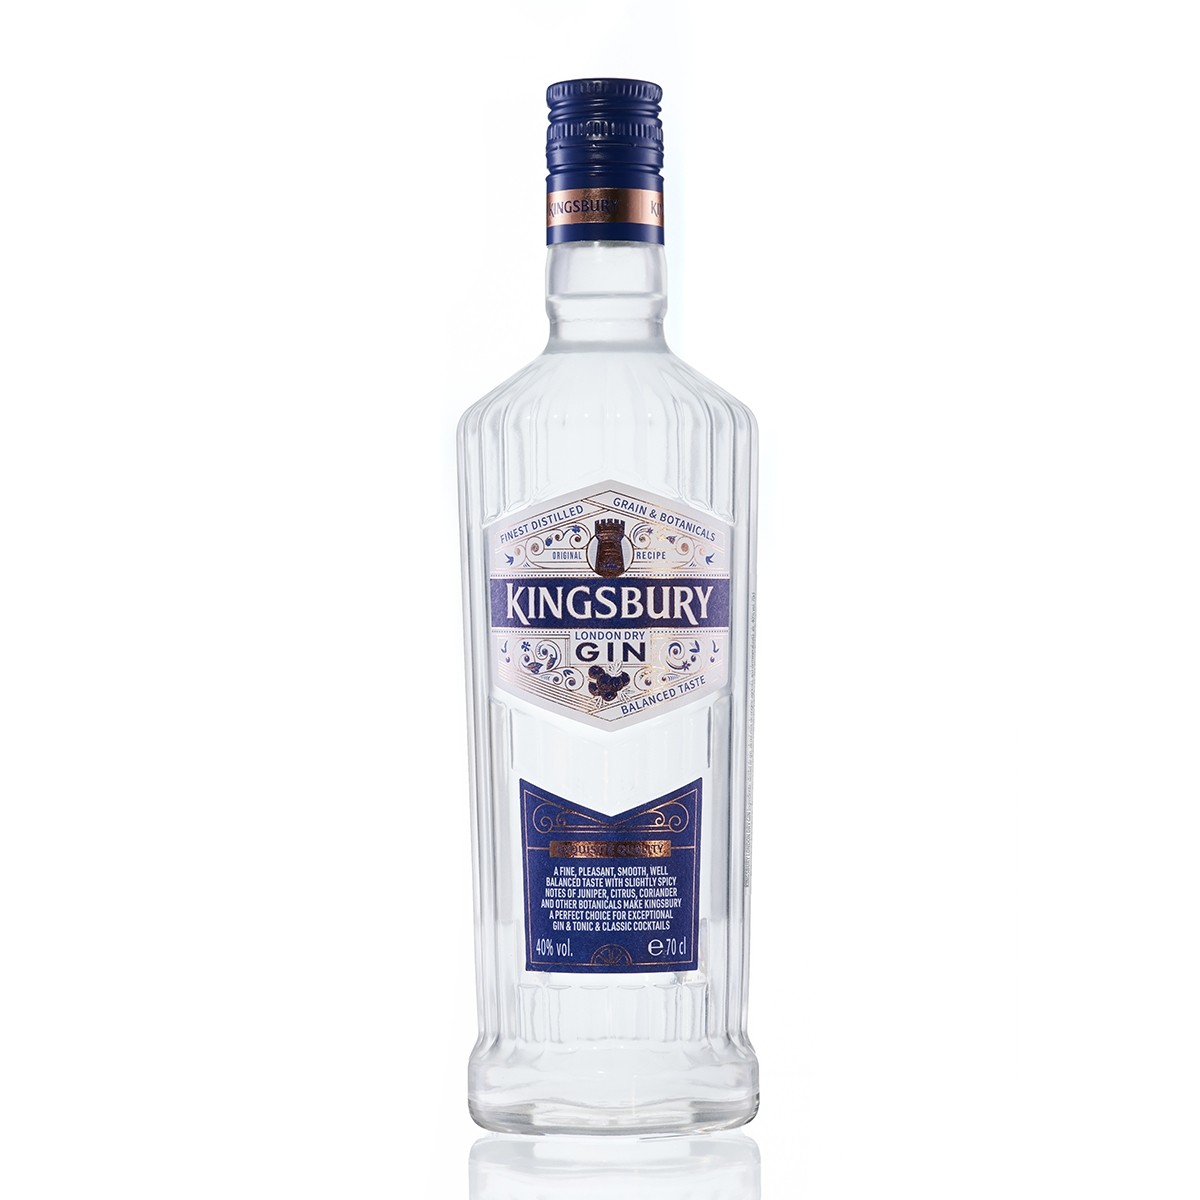 Kingsbury London Dry Gin 700 ml